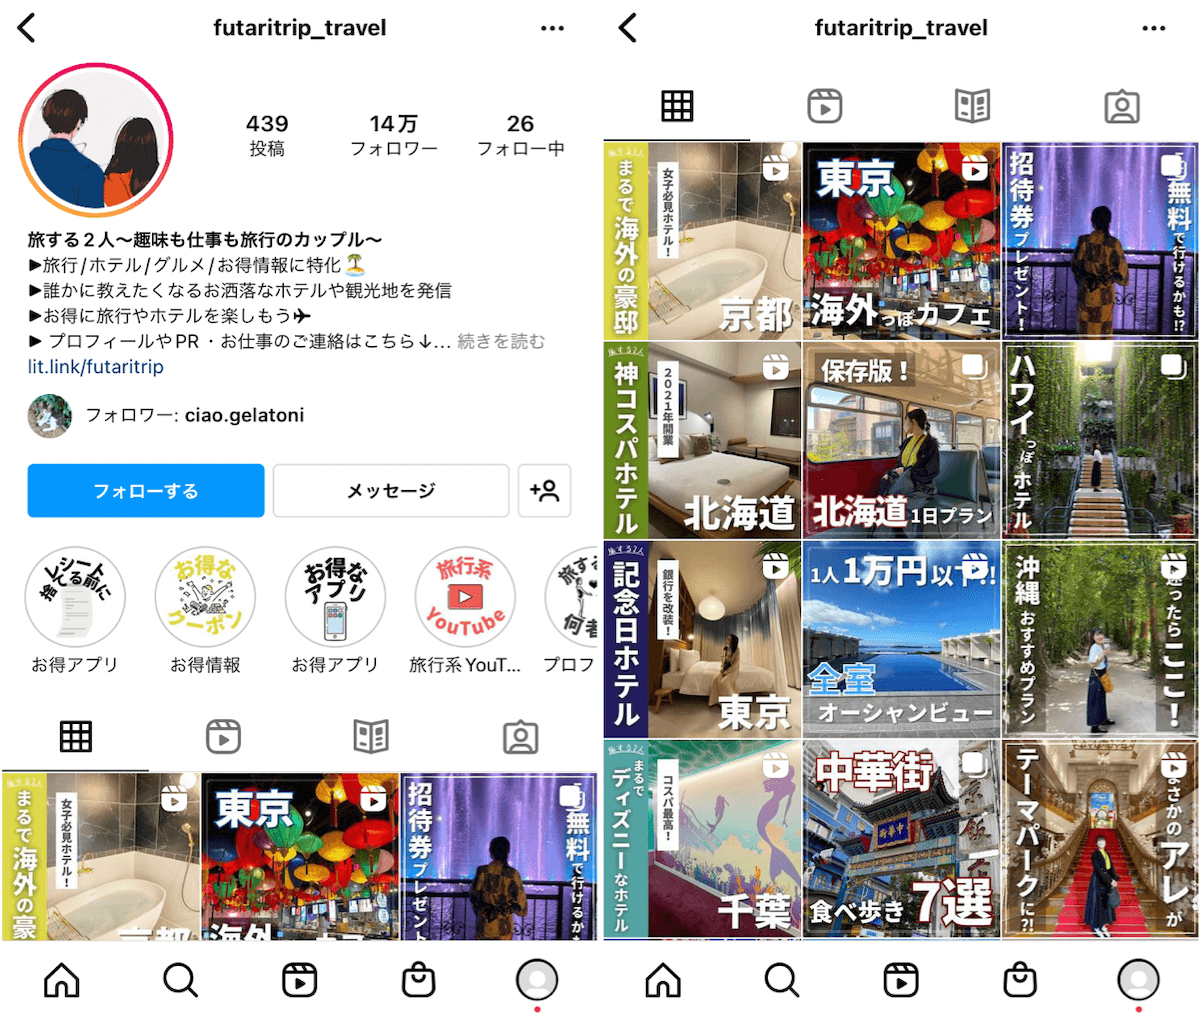 instagram-influencer-hotel-ryokan-futaritrip_travel 